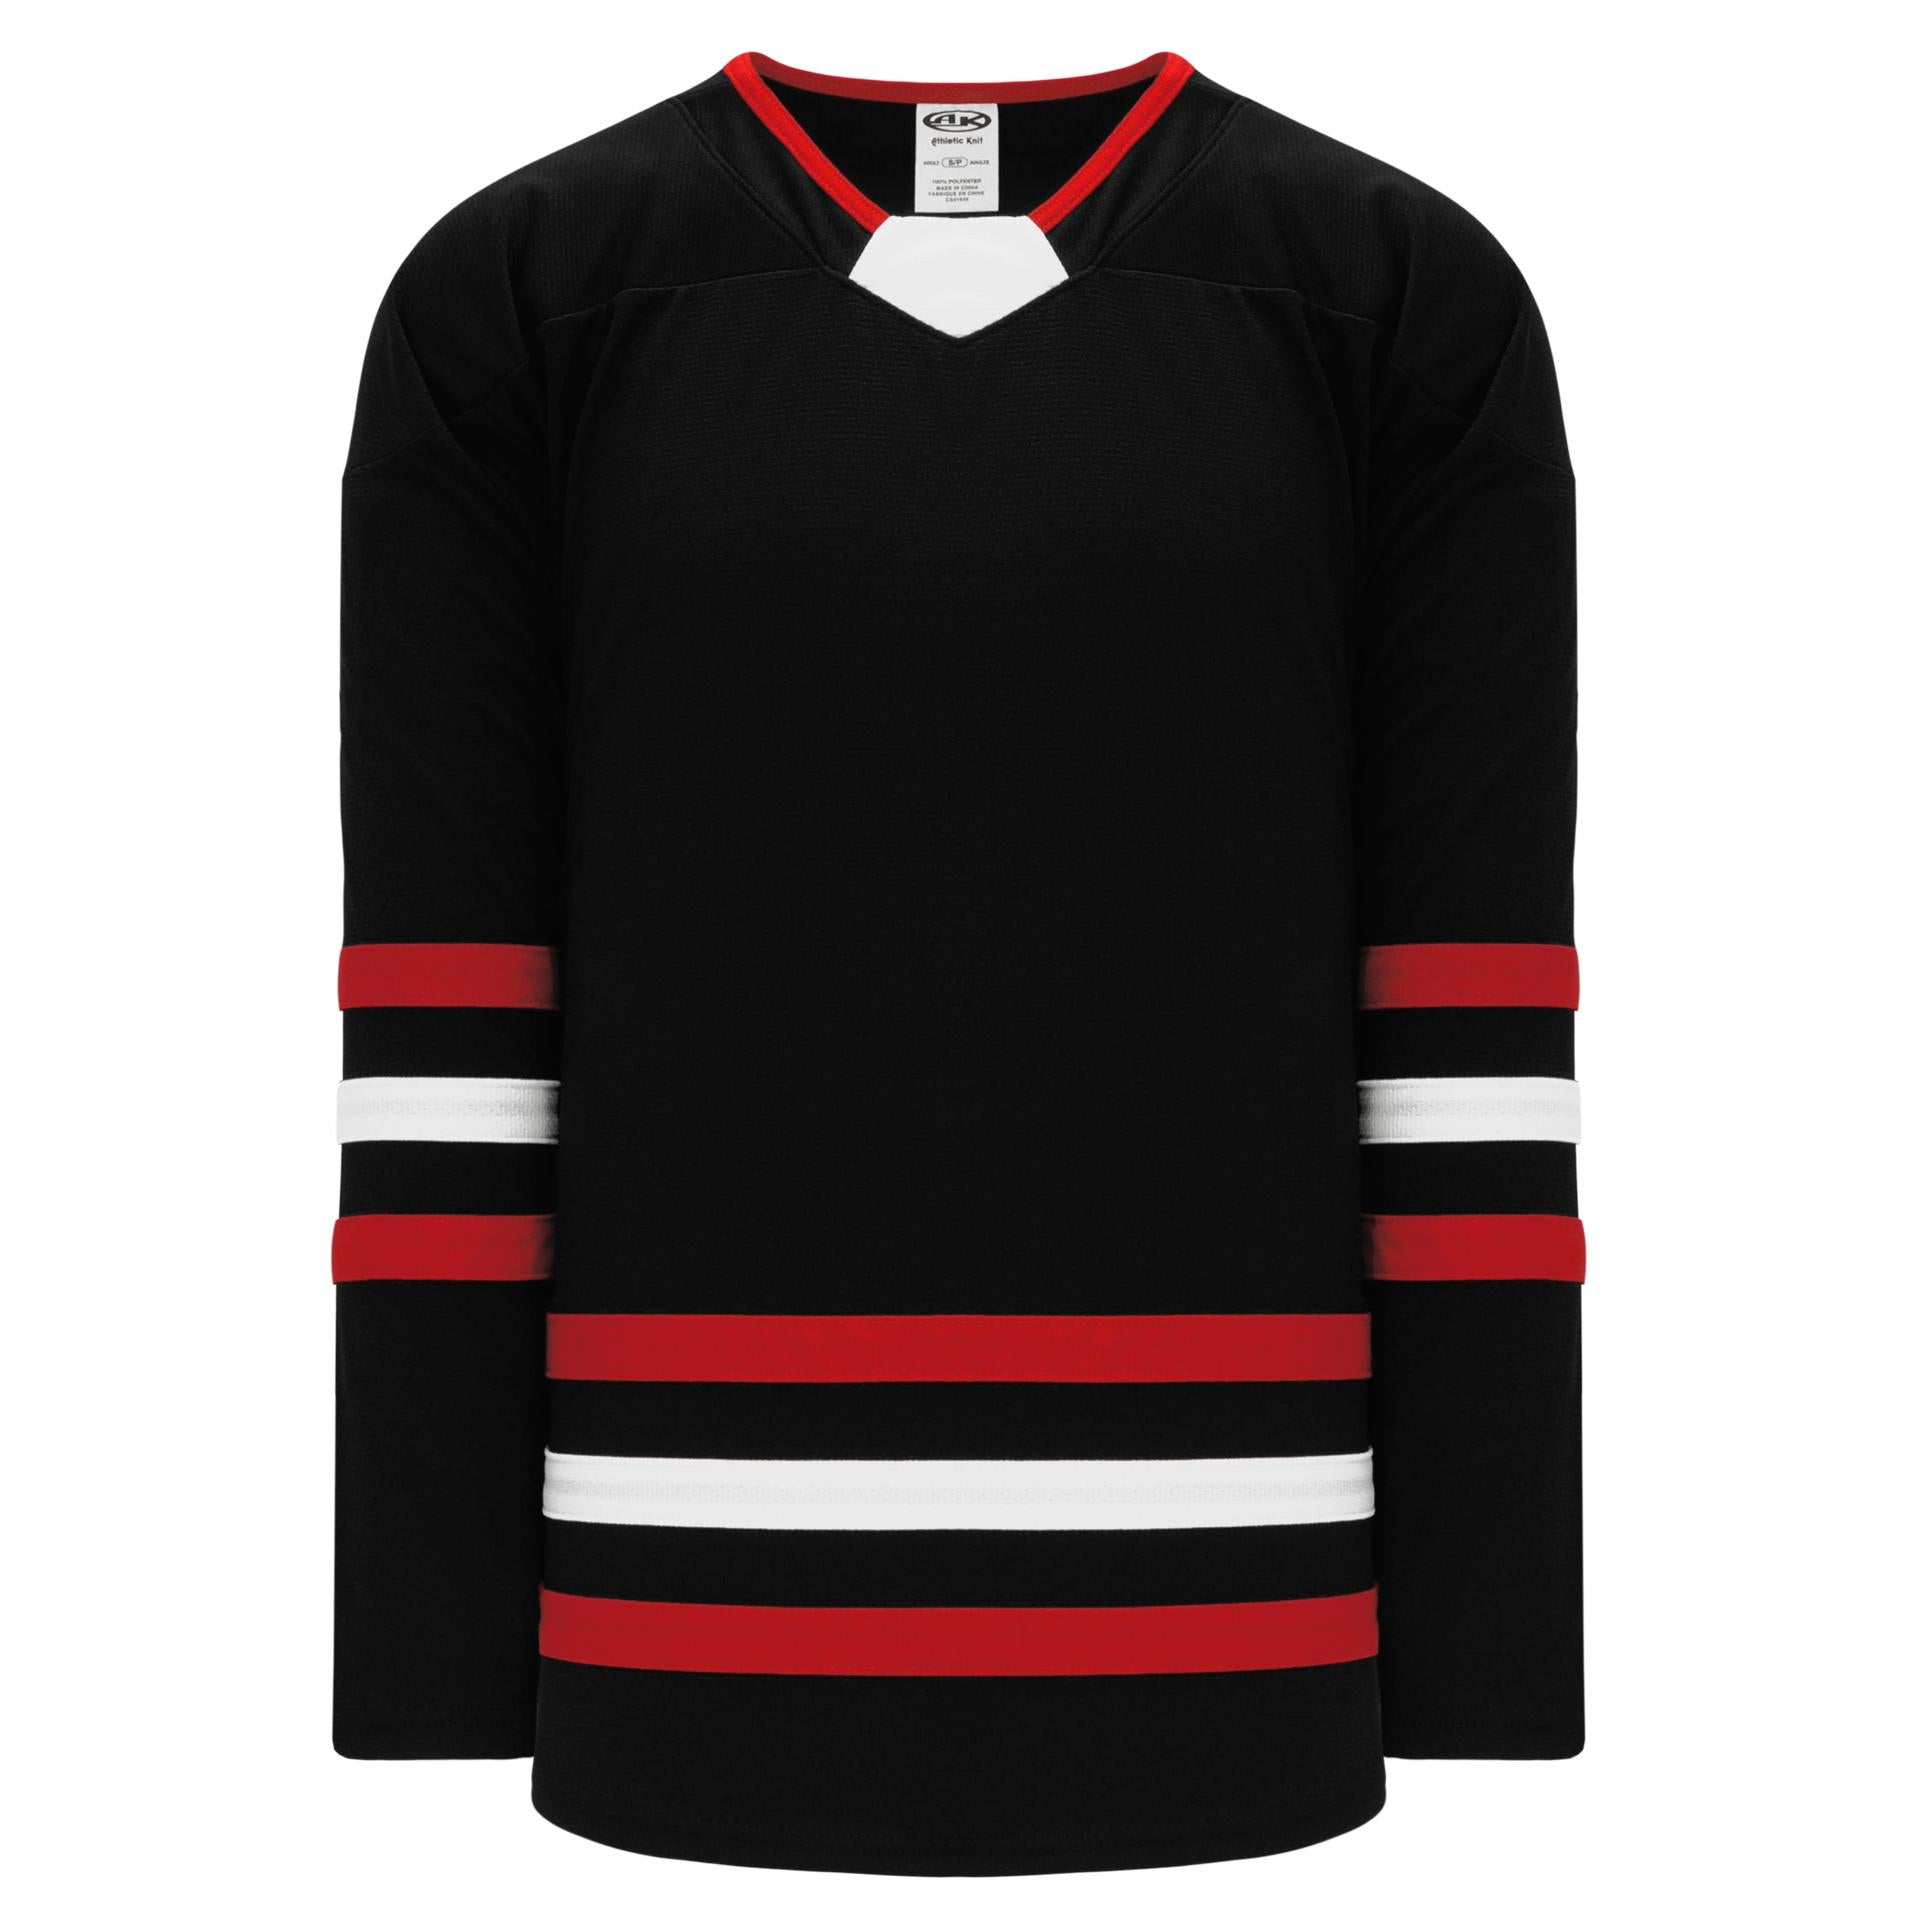 blackhawks hockey jersey